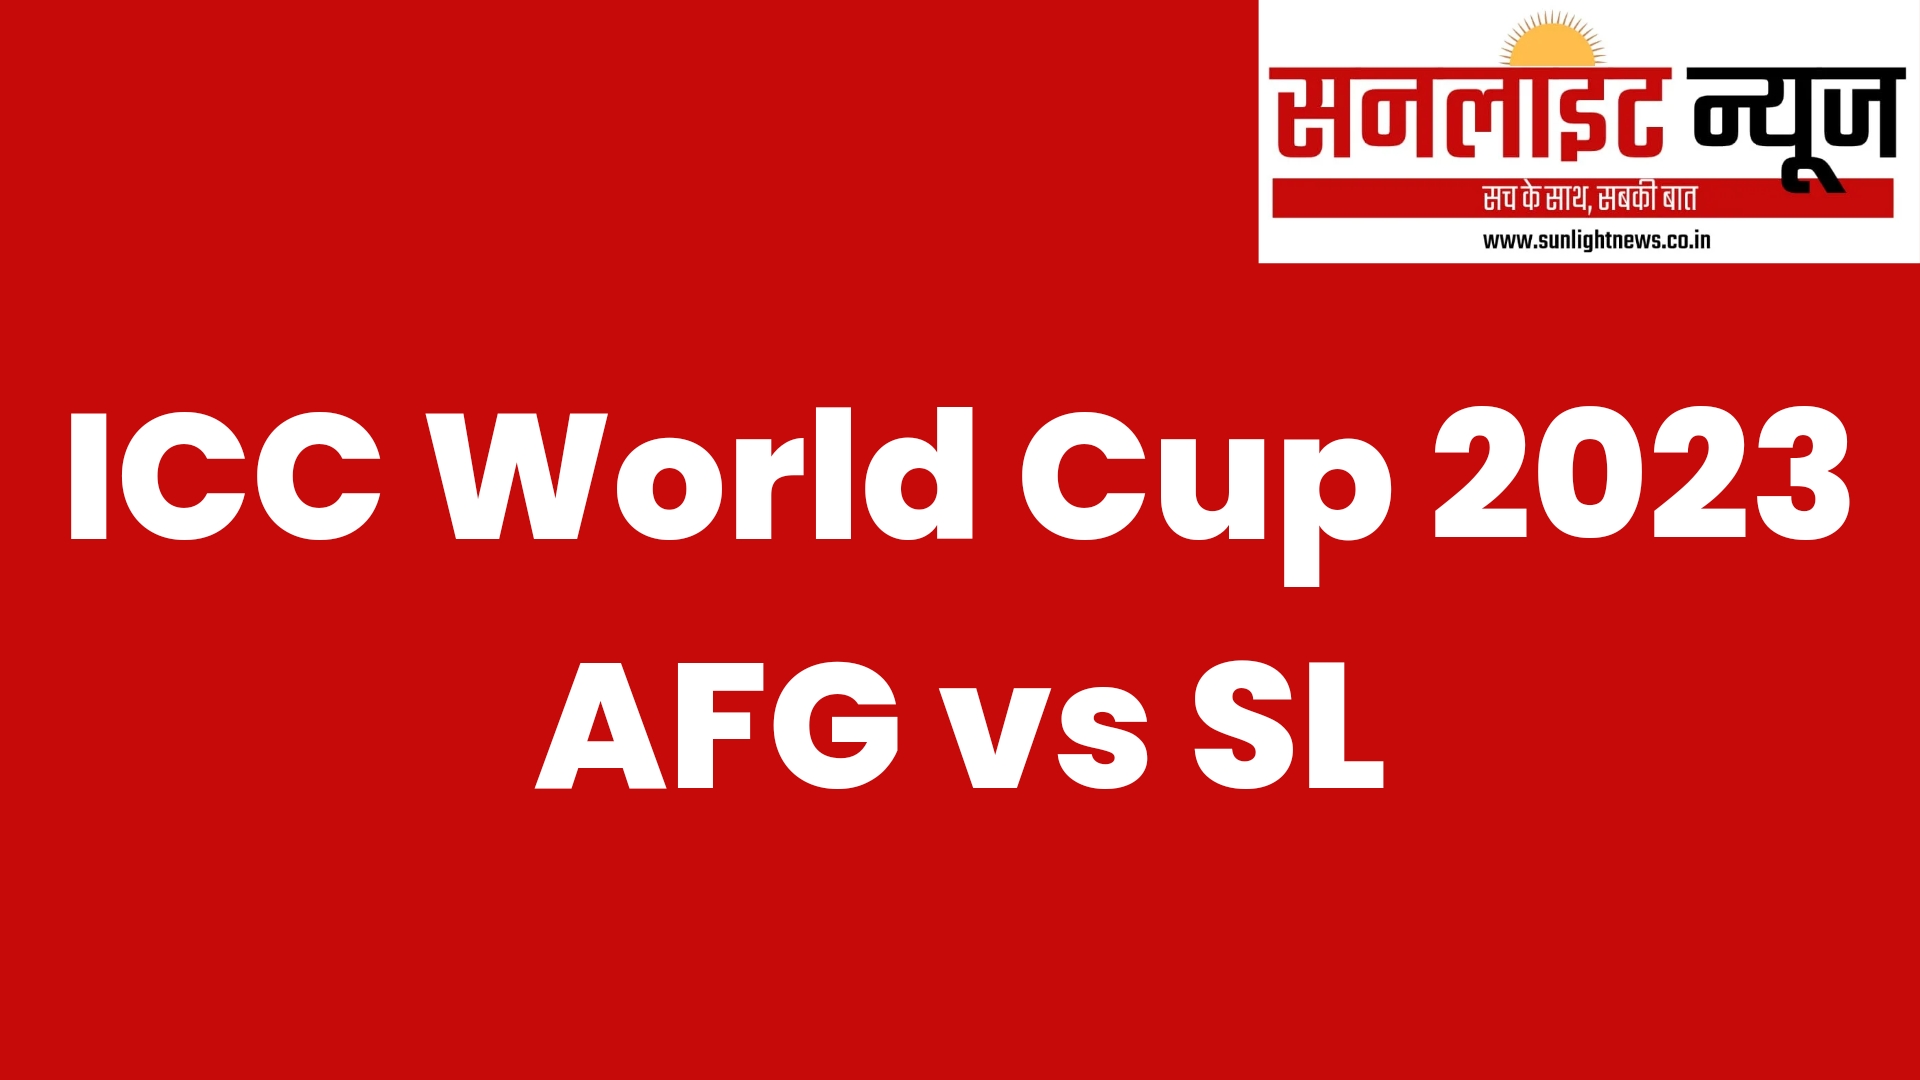 AFG vs SL